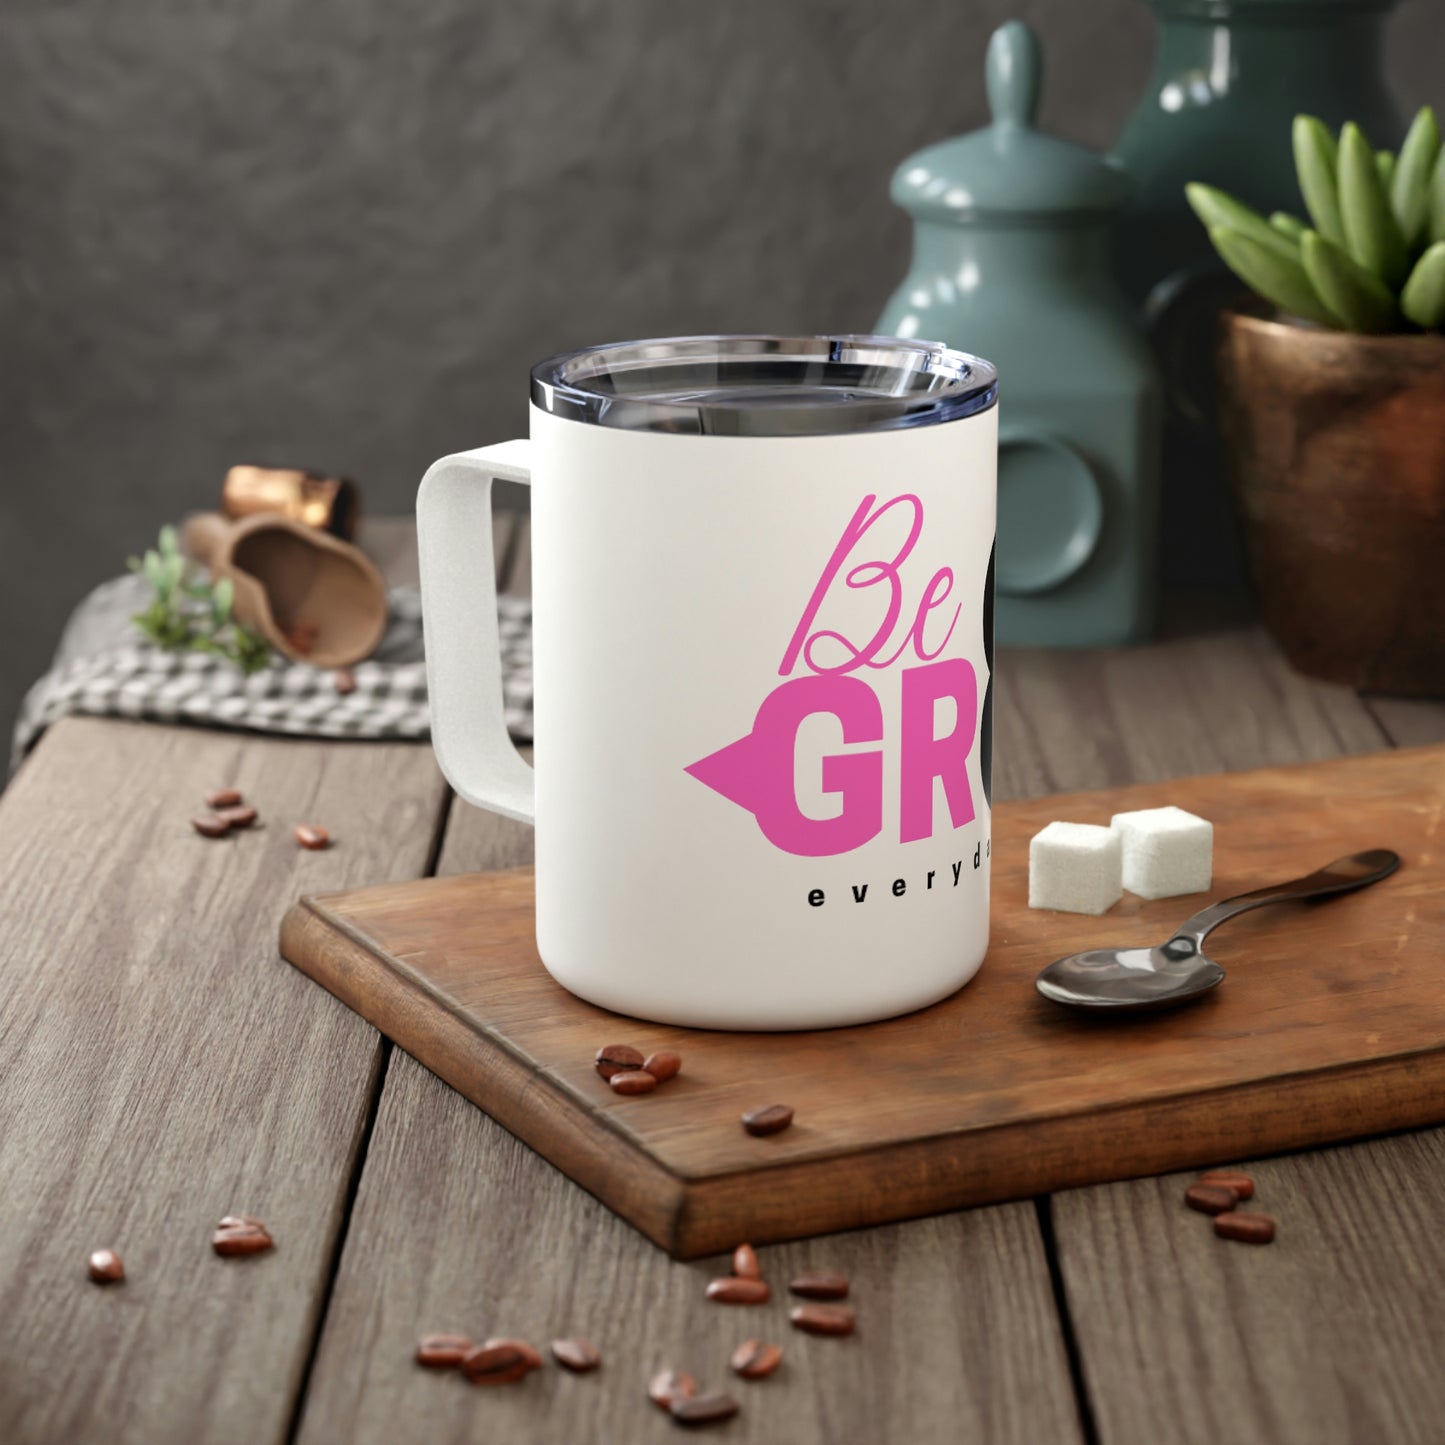 White And Pink/Black Insulated Coffee Mug, 10oz